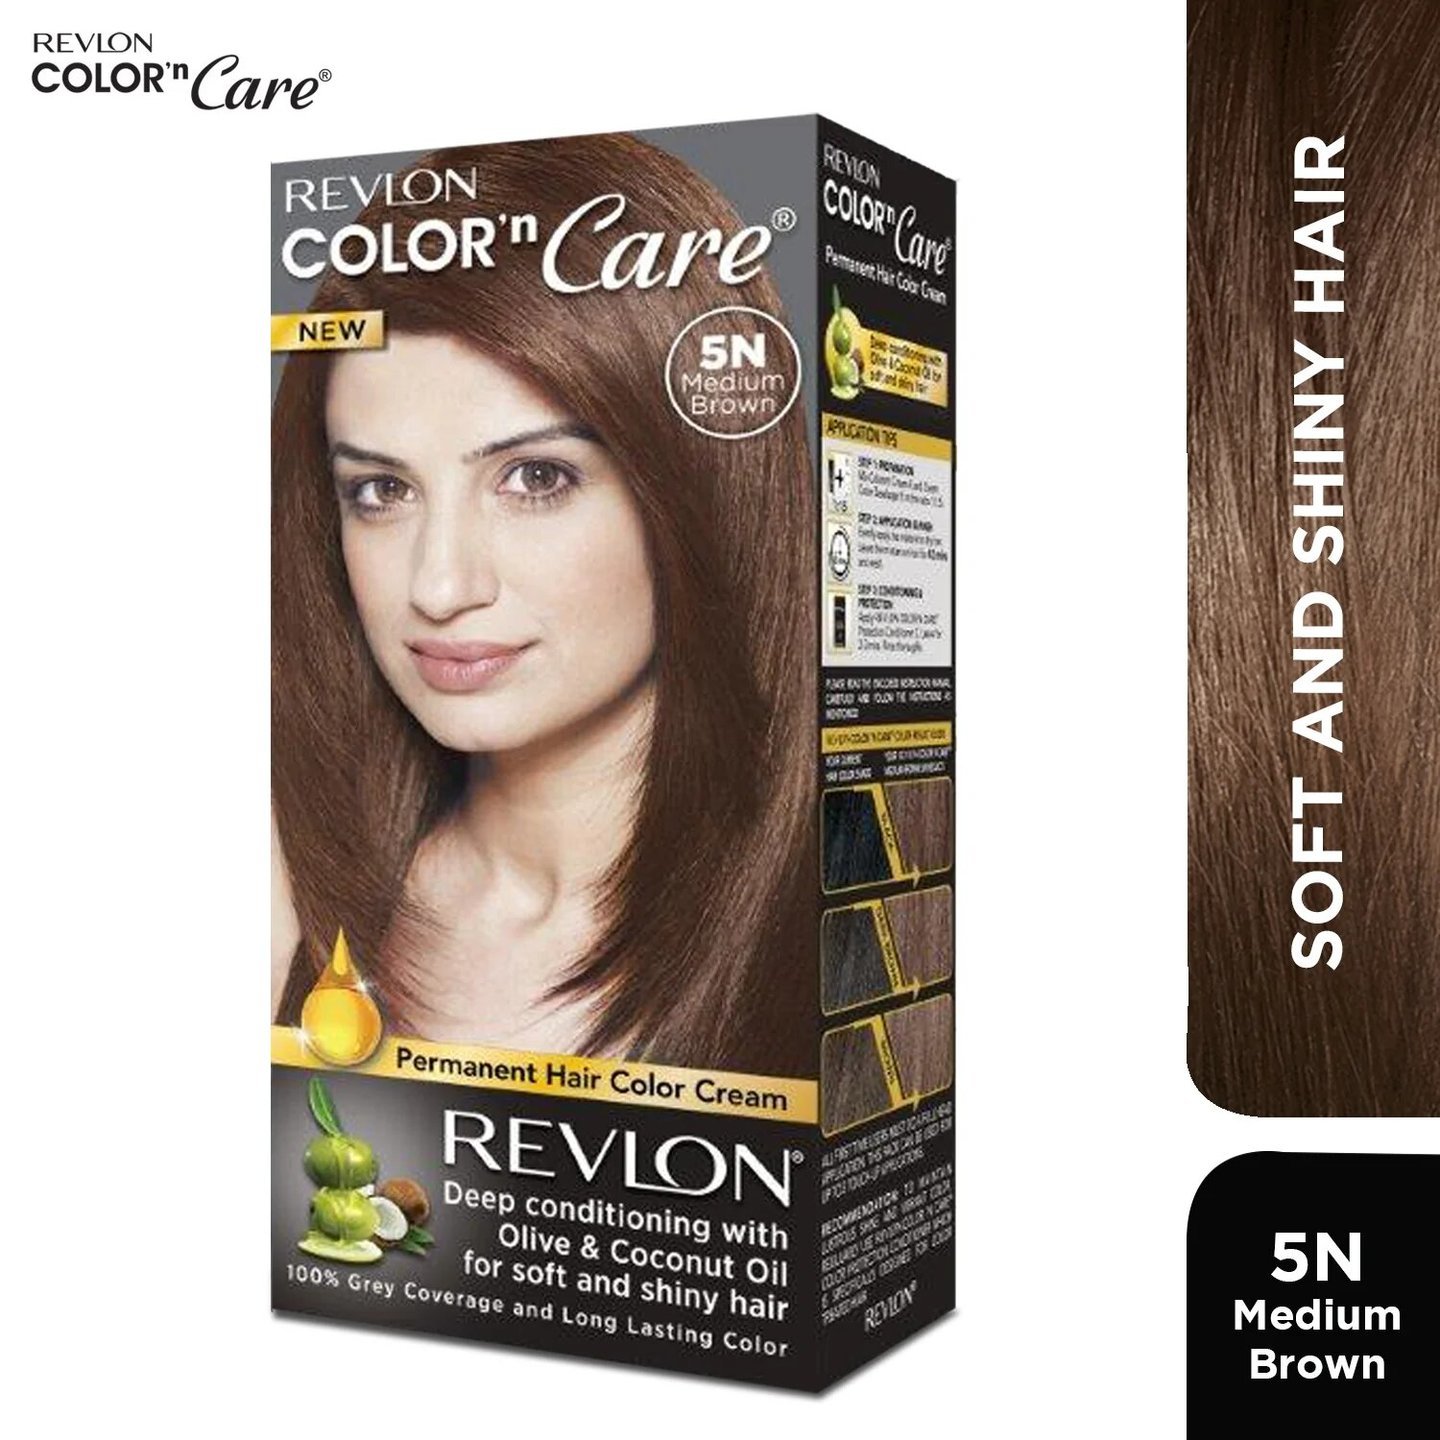 Revlon COLOR N CARE MEDIUM BROWN 5N Hair colour